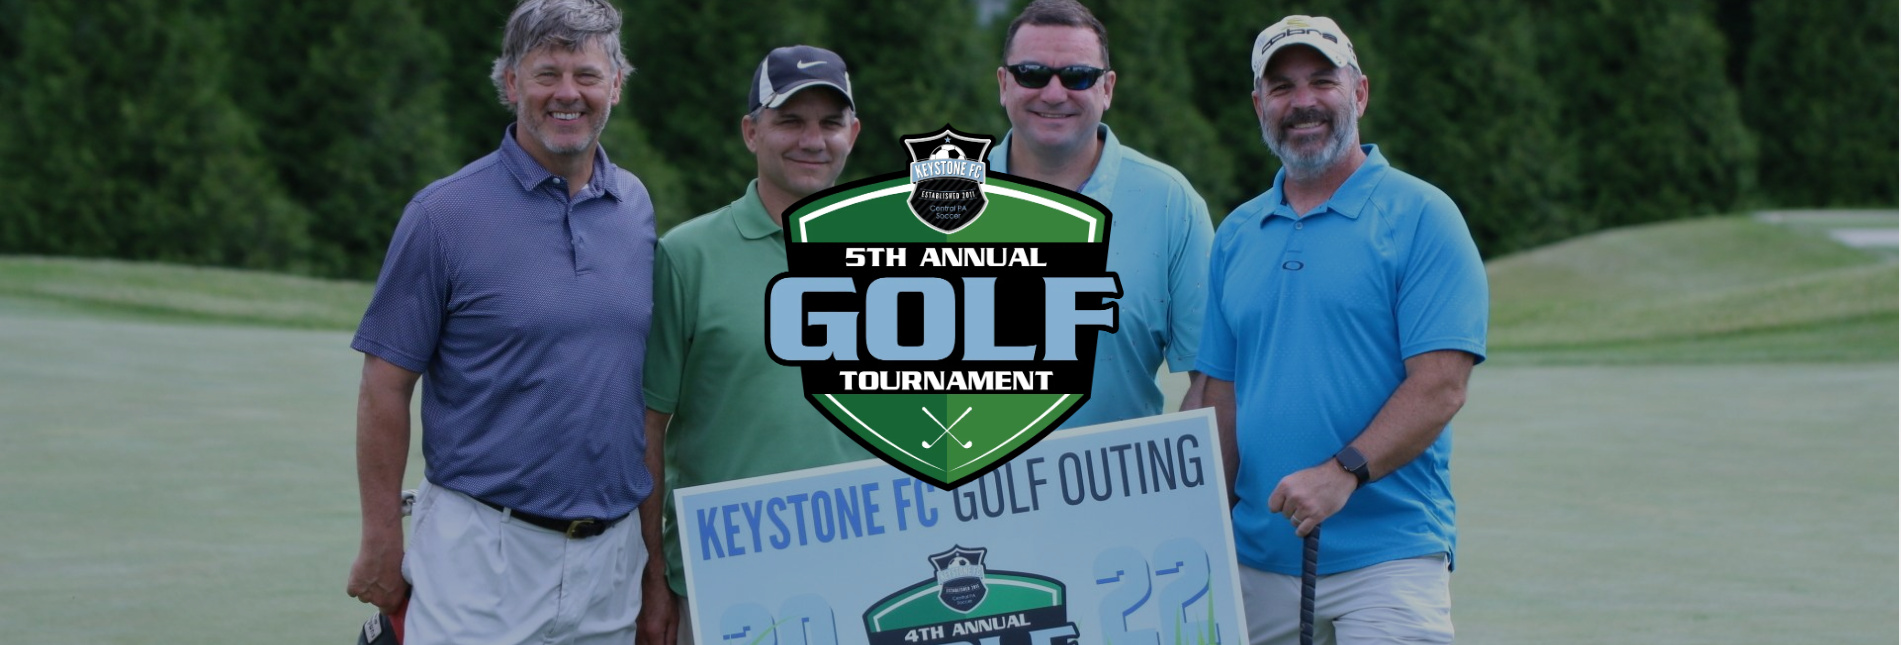 Keystone FC Golf Tournament